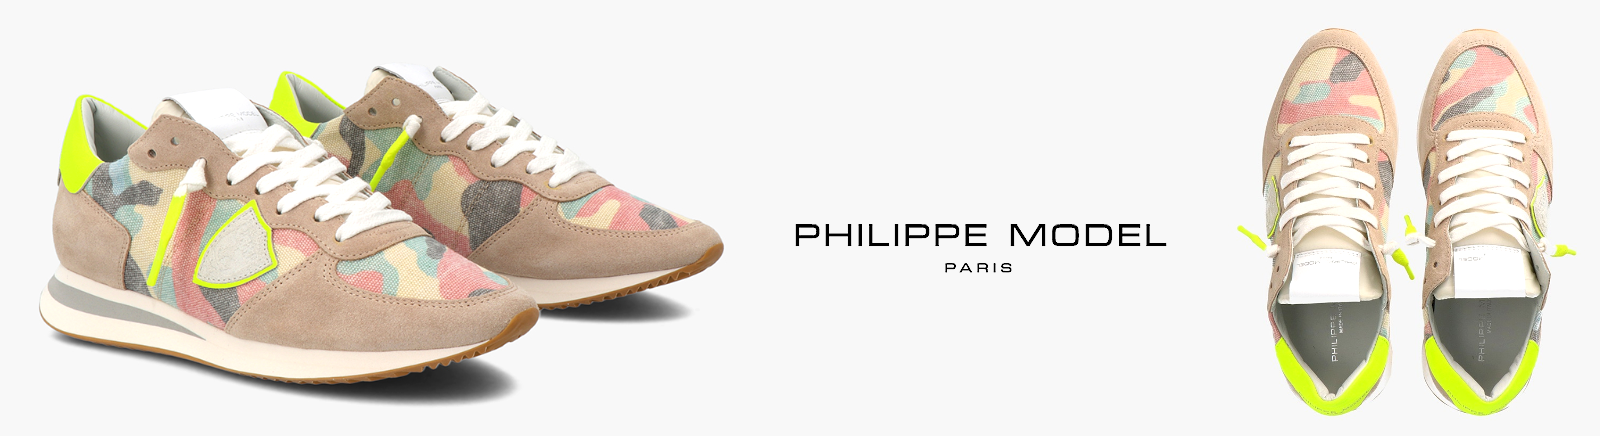 PHILIPPE MODEL Schuhe online bestellen im Juppen Shop